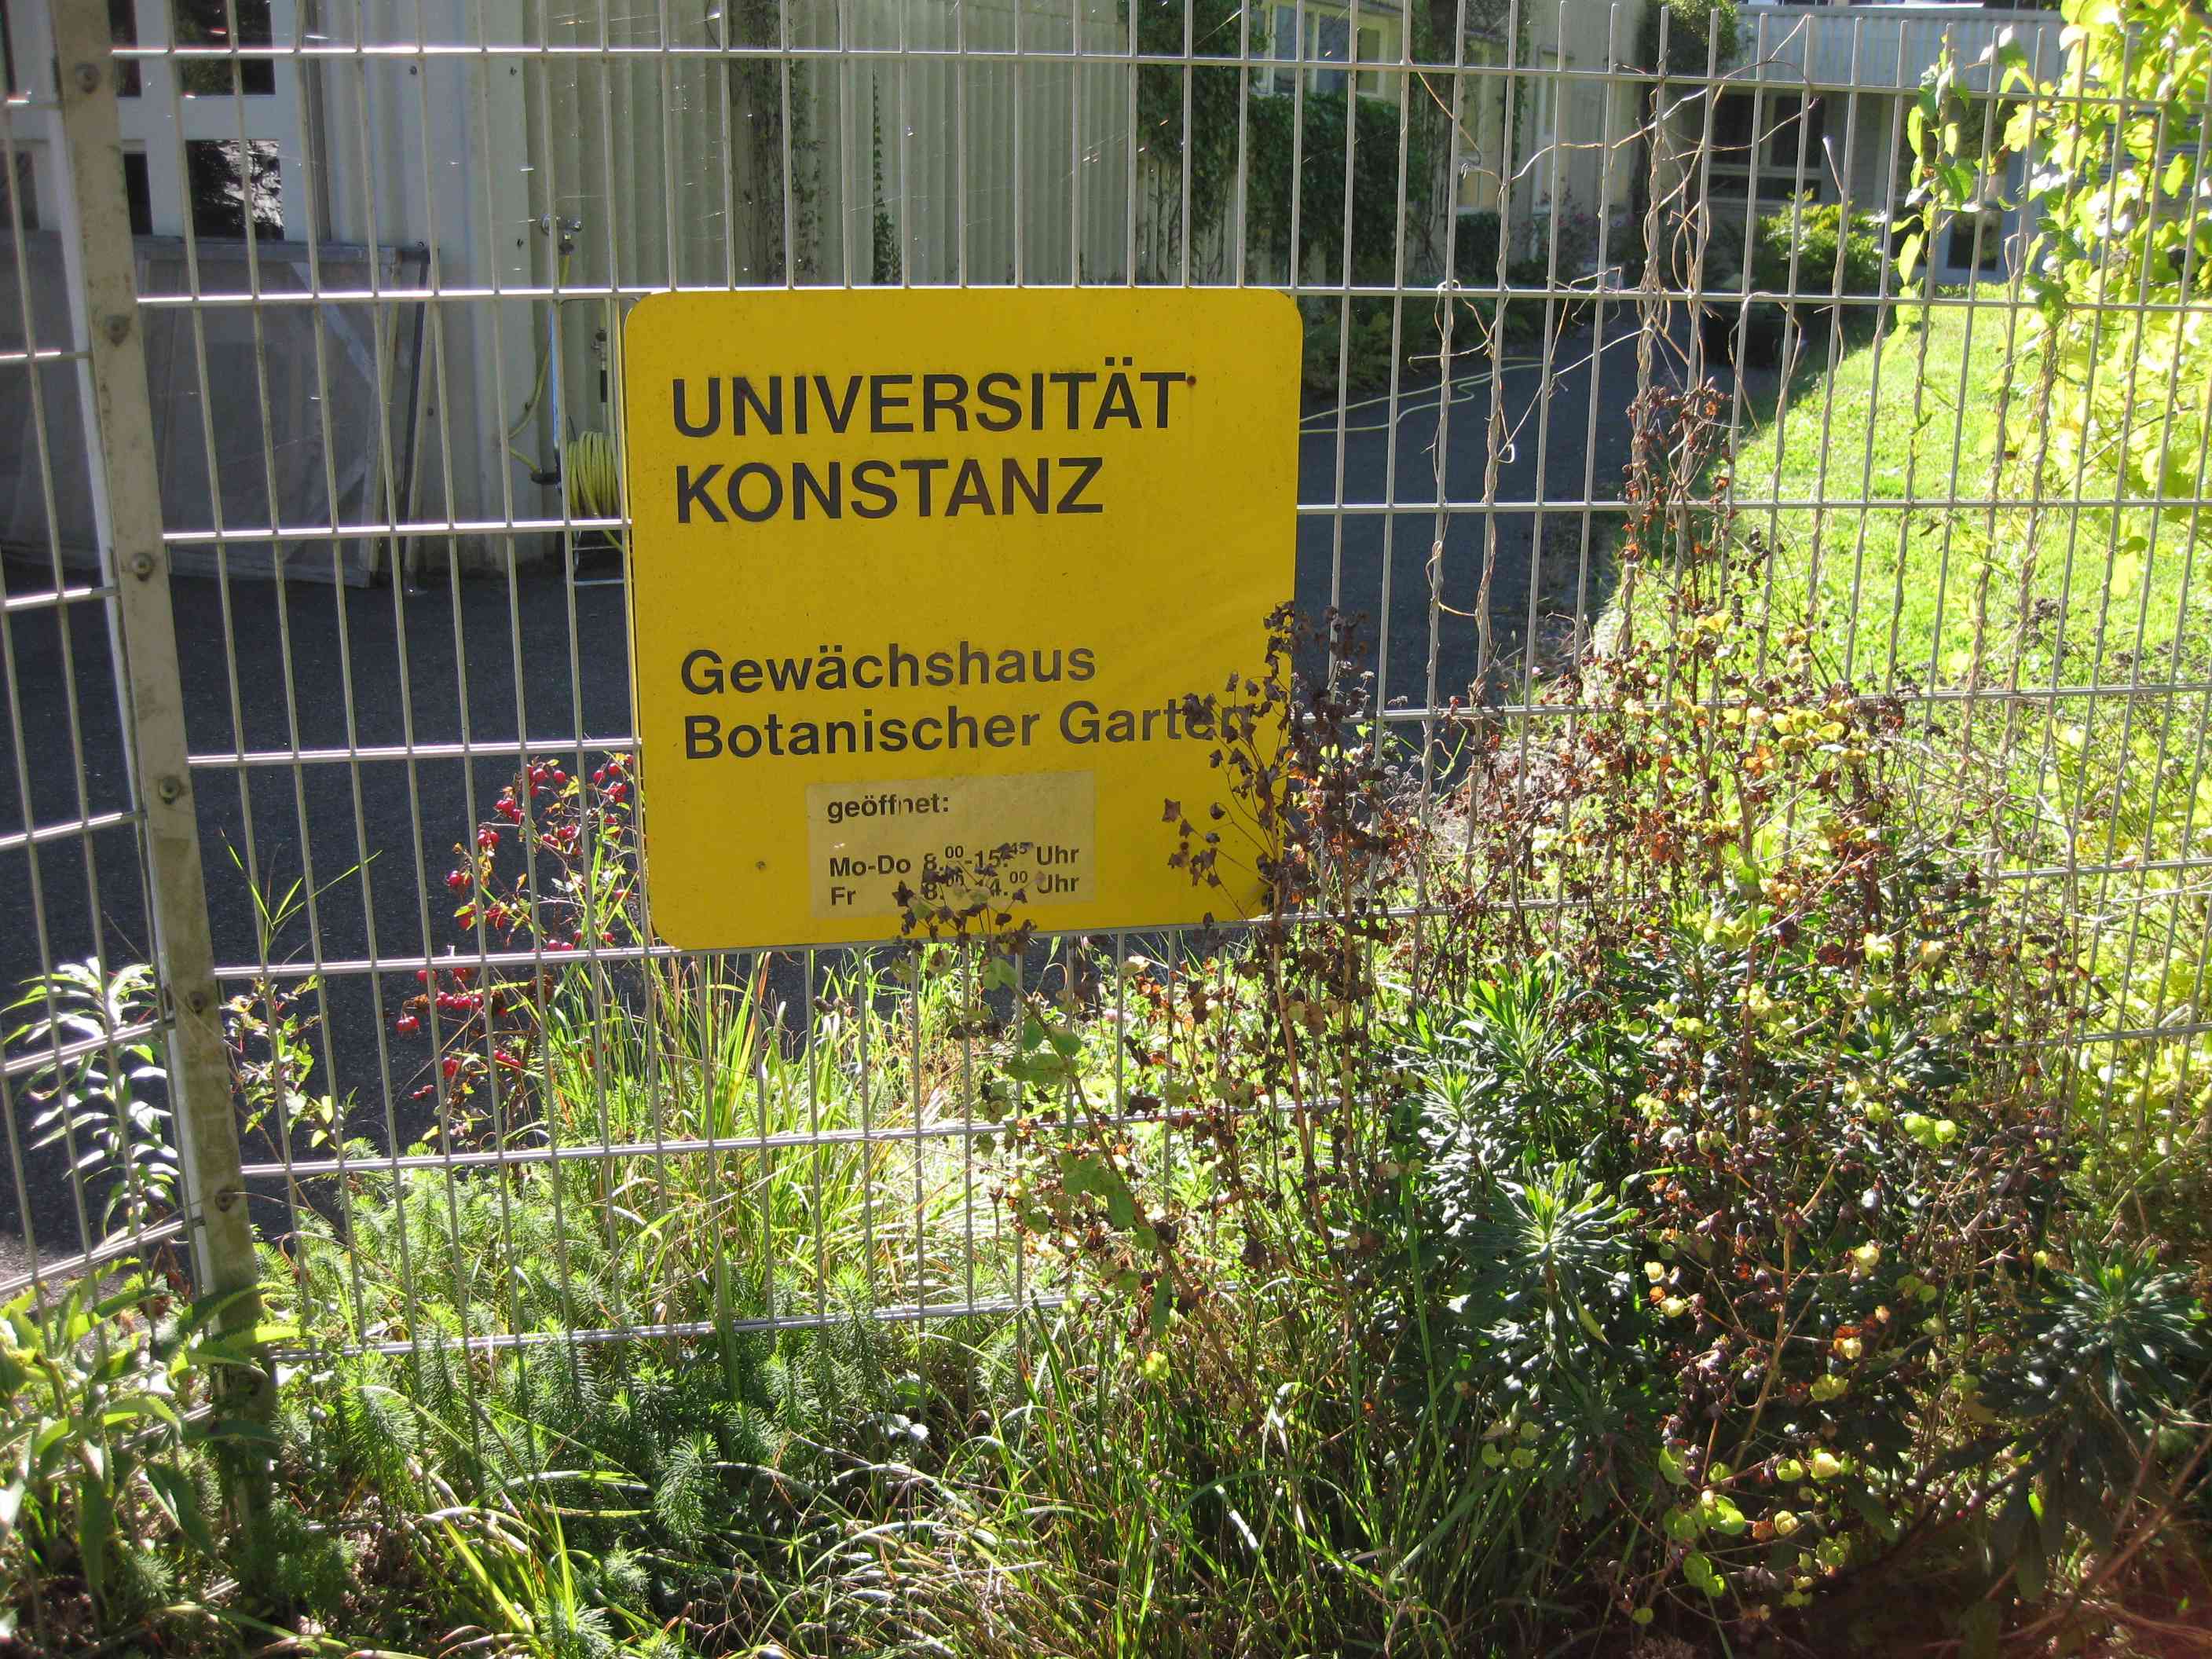 Constance University: entry of the botanical garden